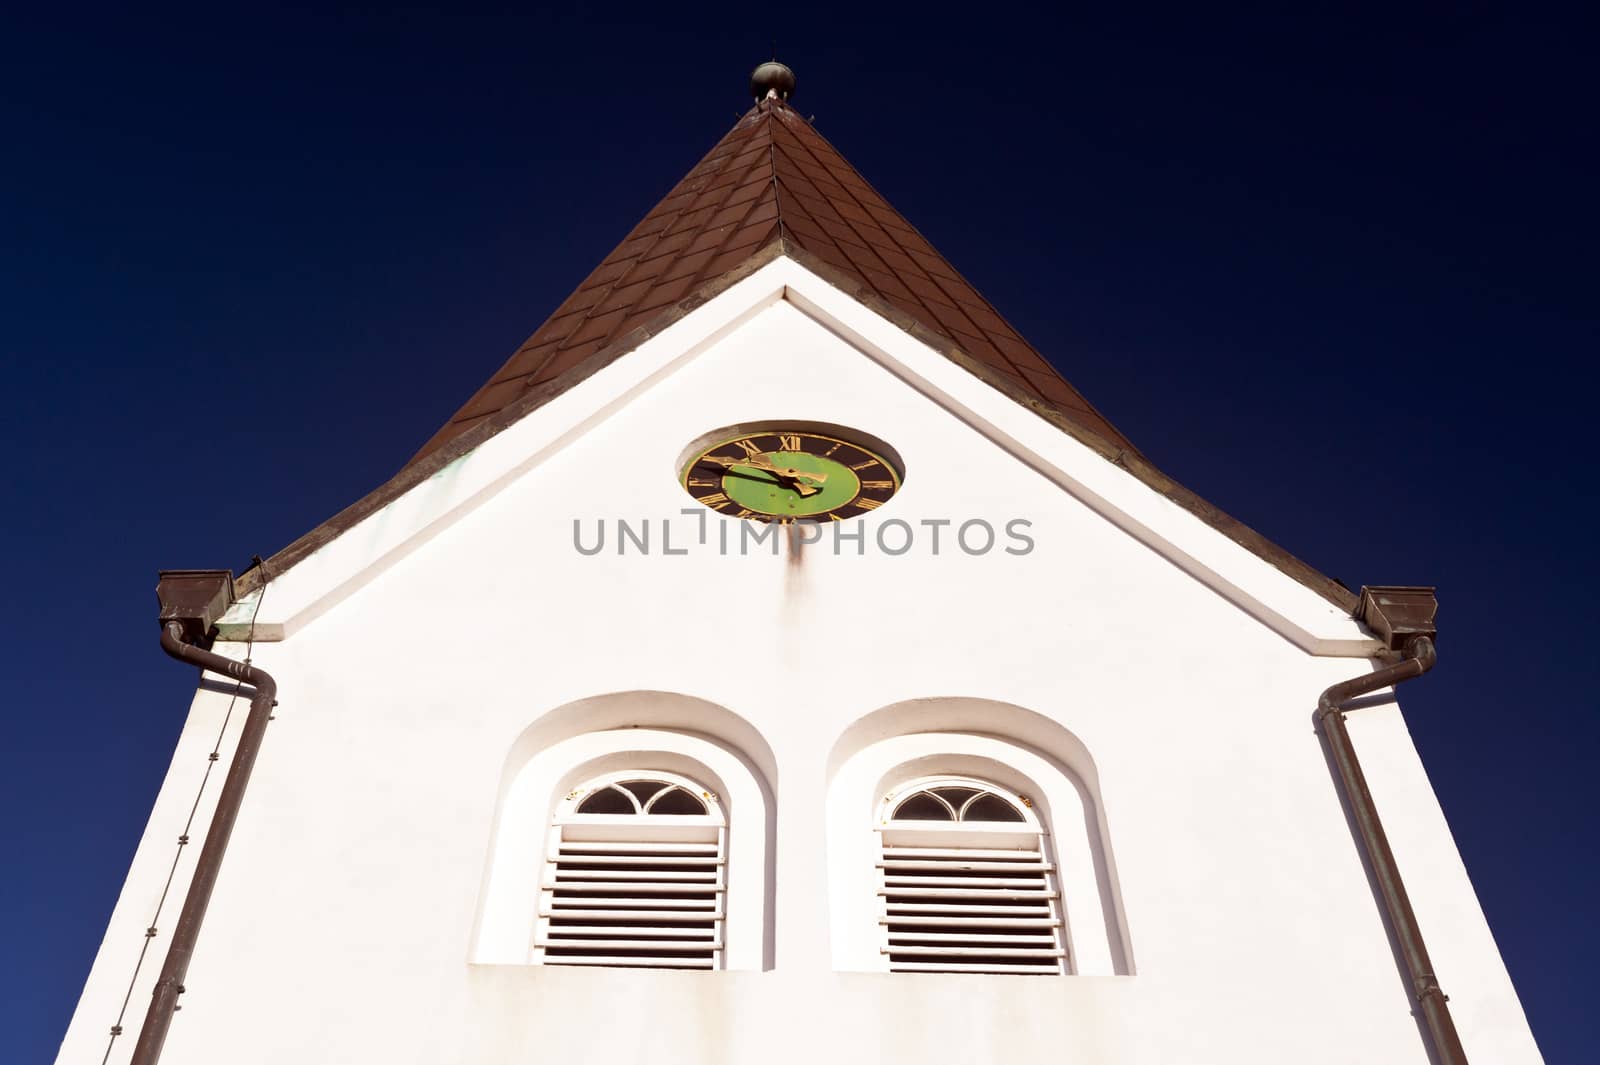 Church of Nebel on Amrum, Germany by 3quarks